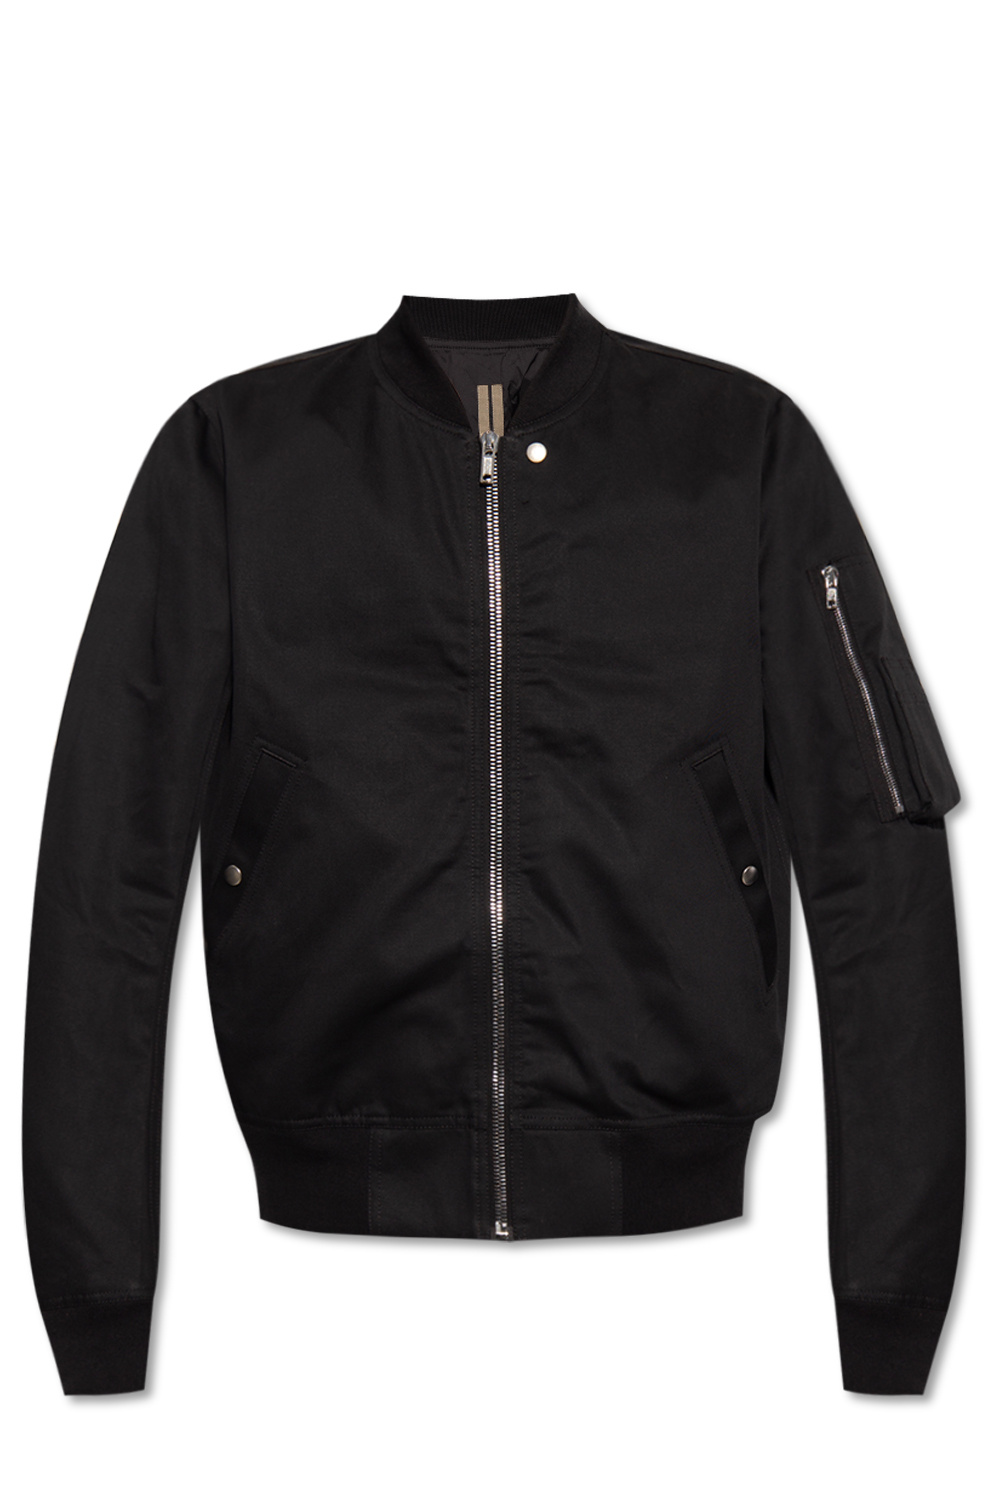 Louis Vuitton Birdseye Bomber Jacket Grey. Size 42